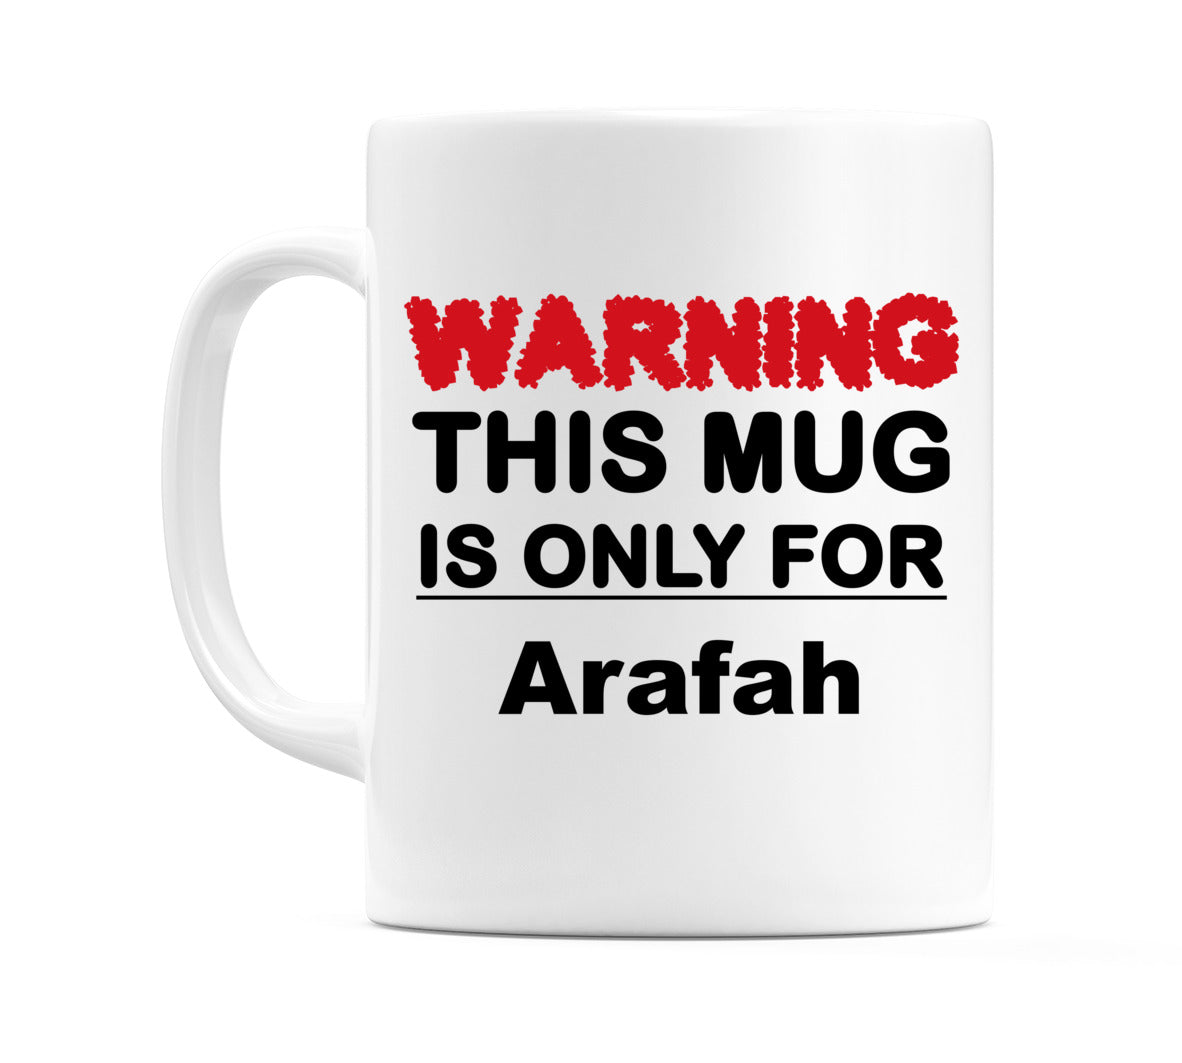 Warning This Mug is ONLY for Arafah Mug